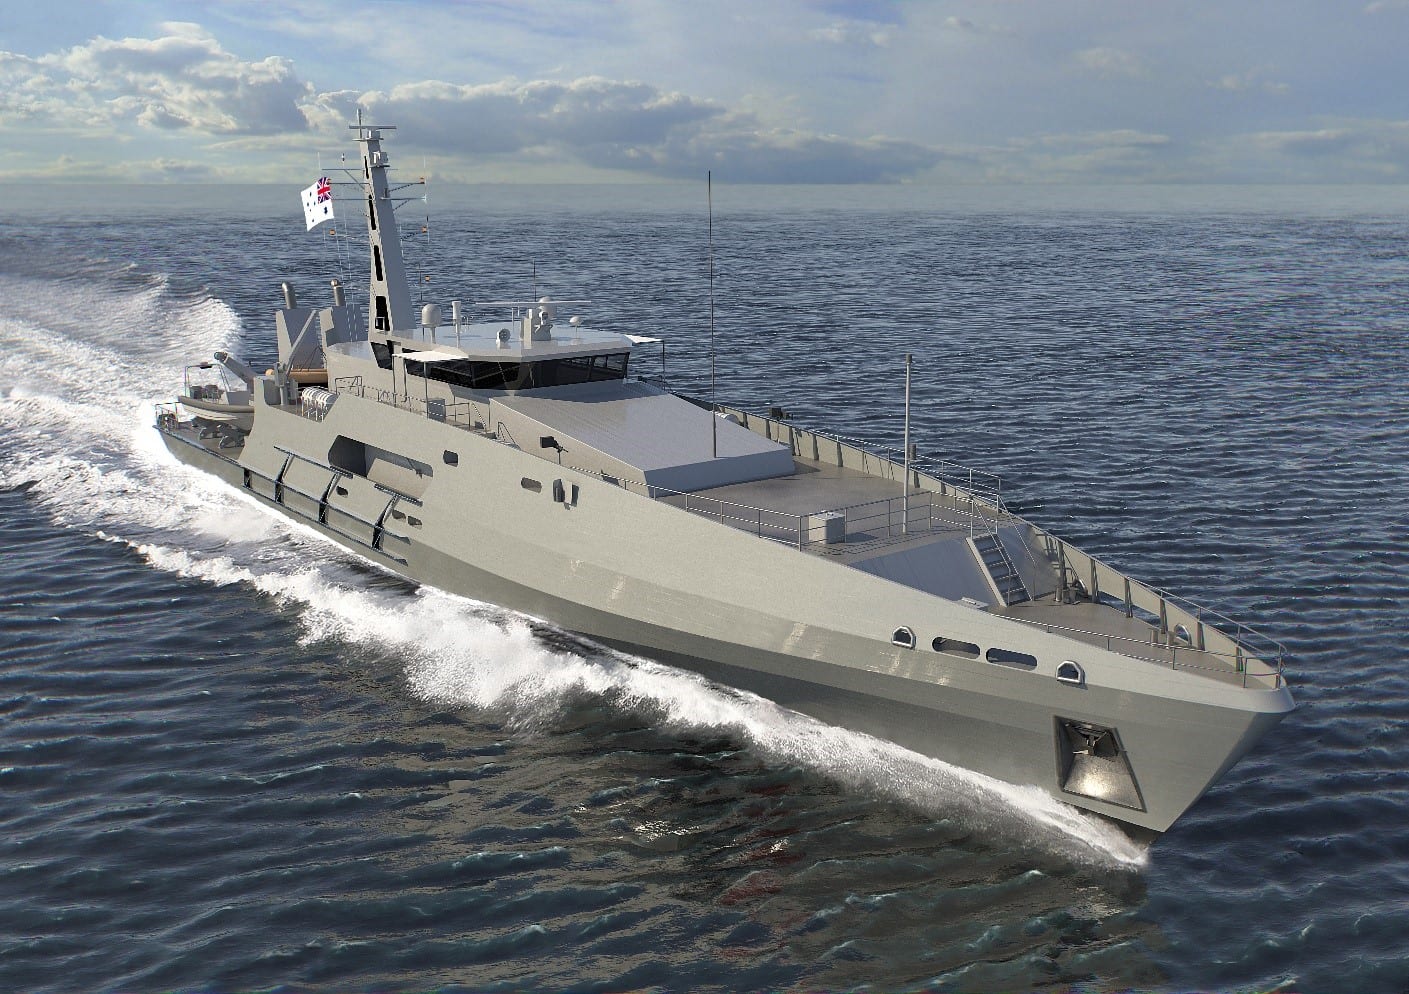 Vestdavit wins contract to supply six Australian Navy patrol boats